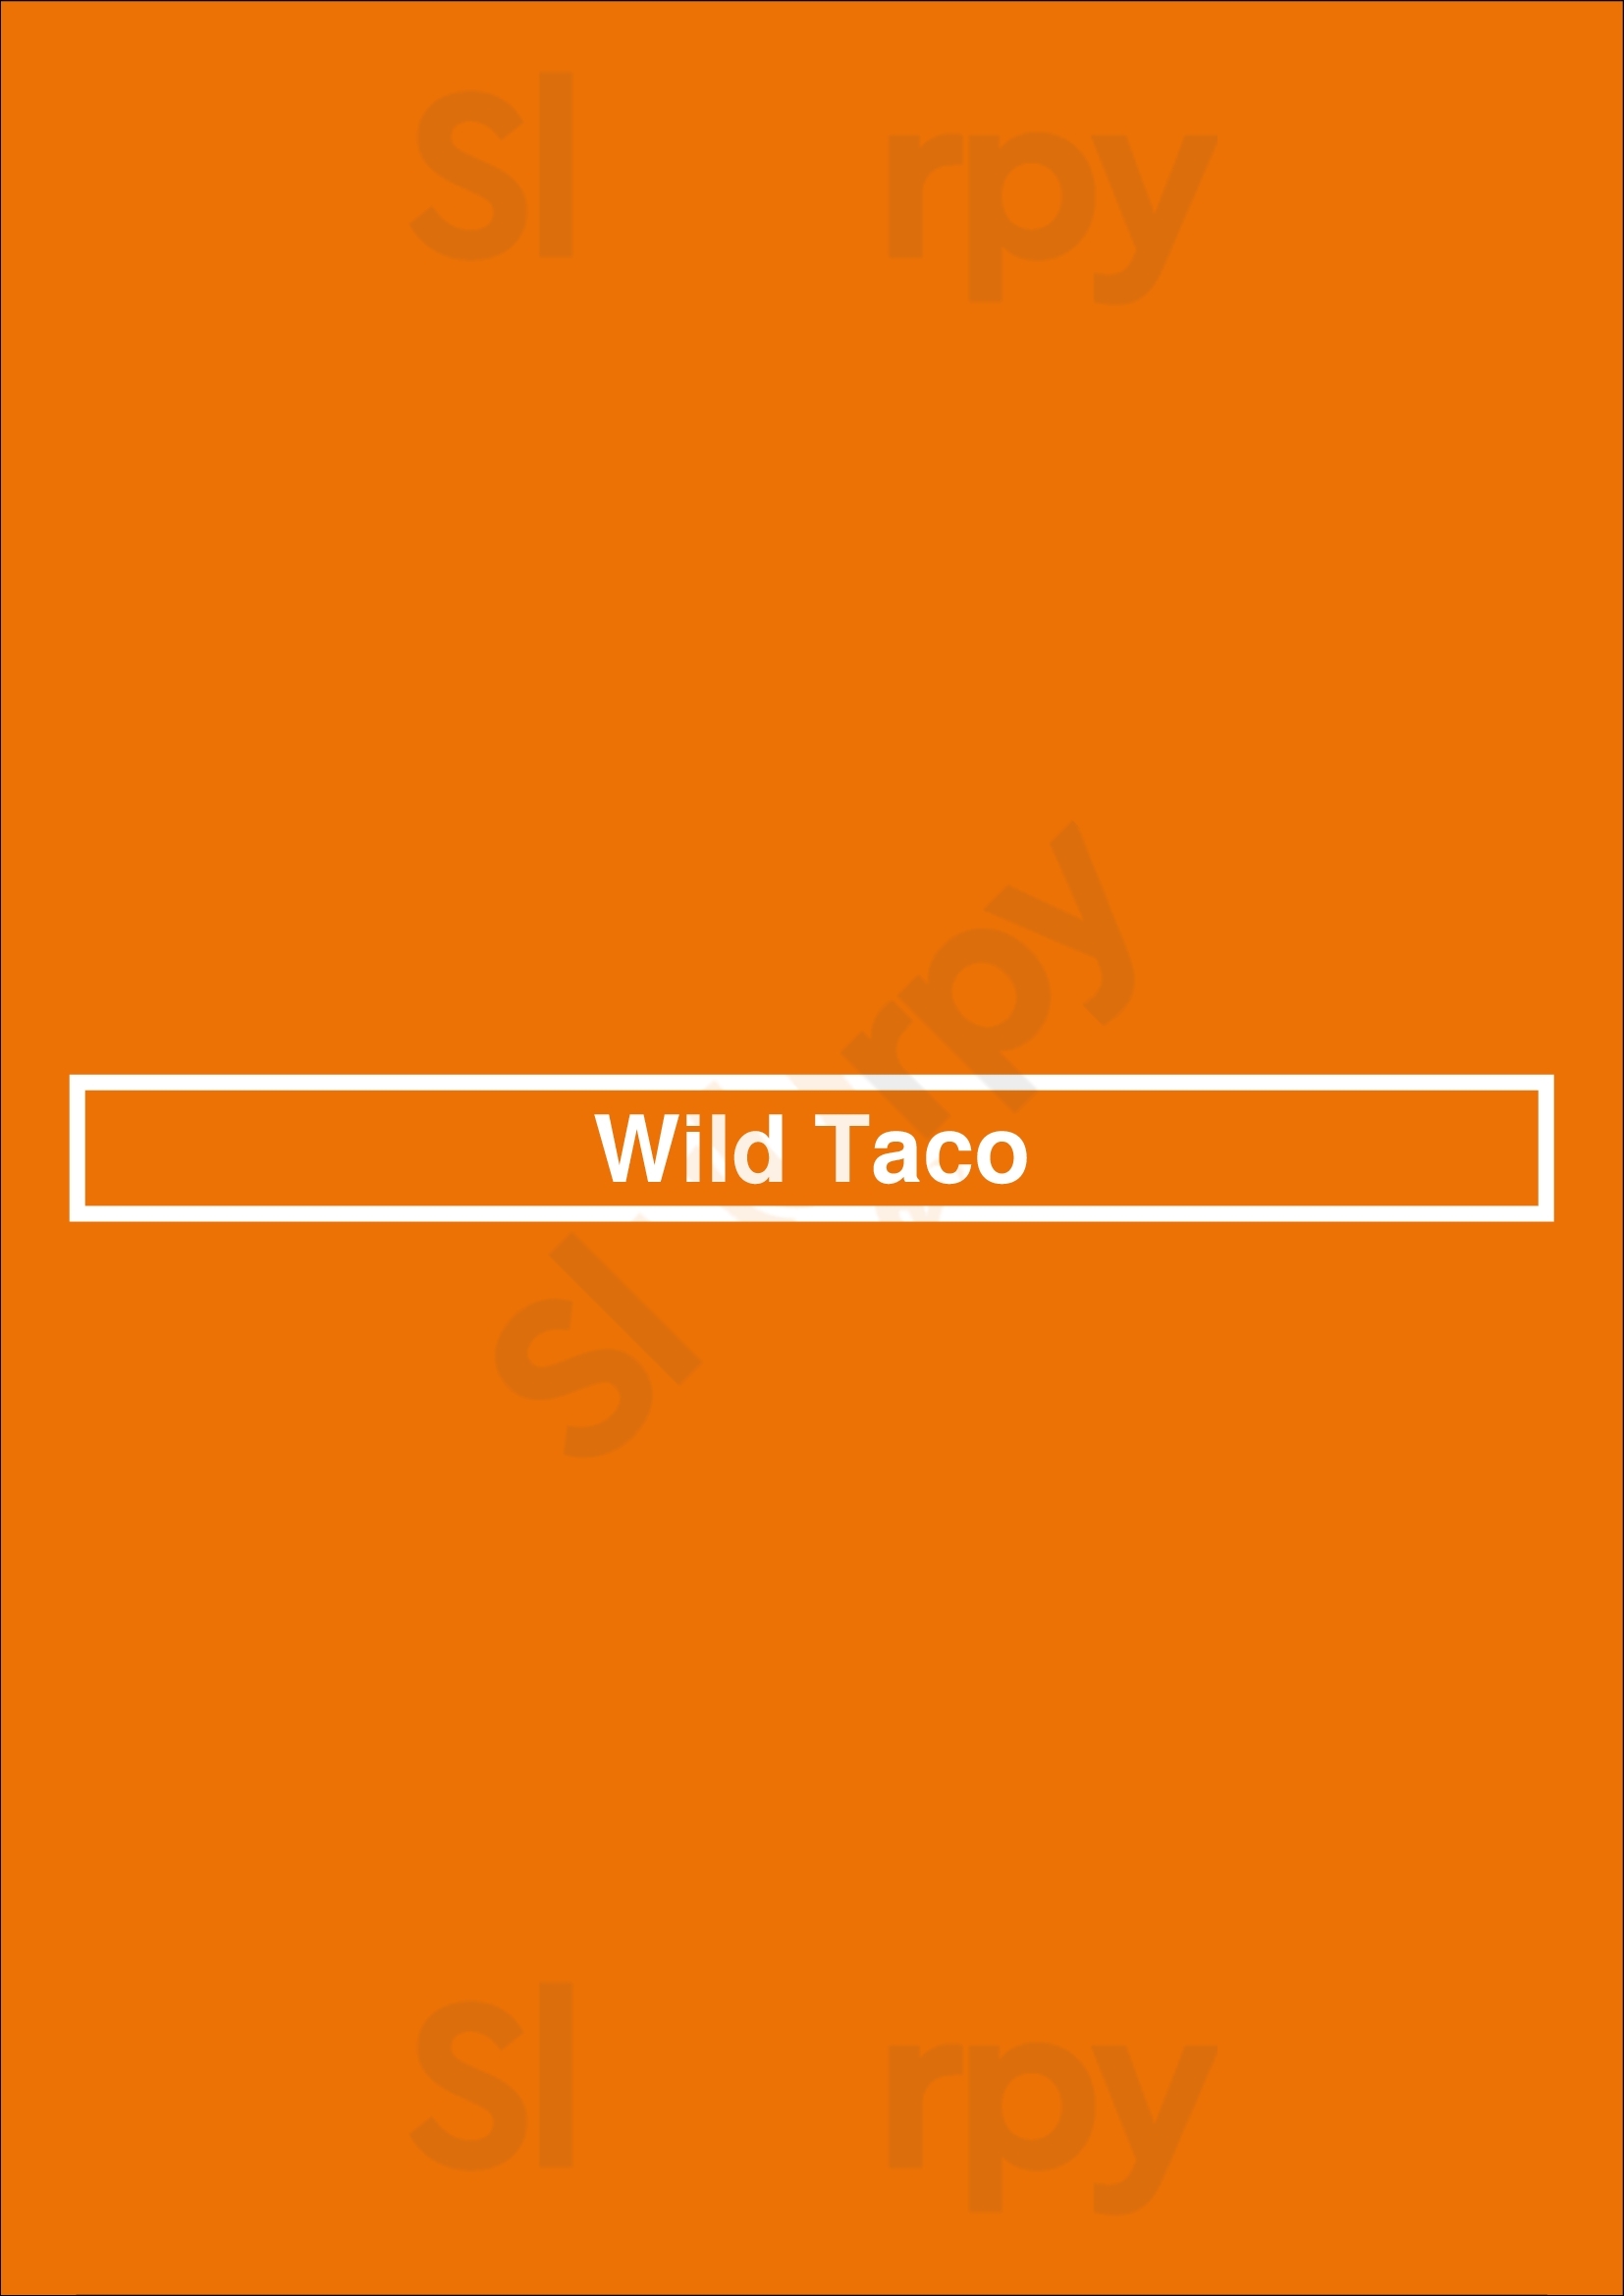 Wild Taco Newport Beach Menu - 1